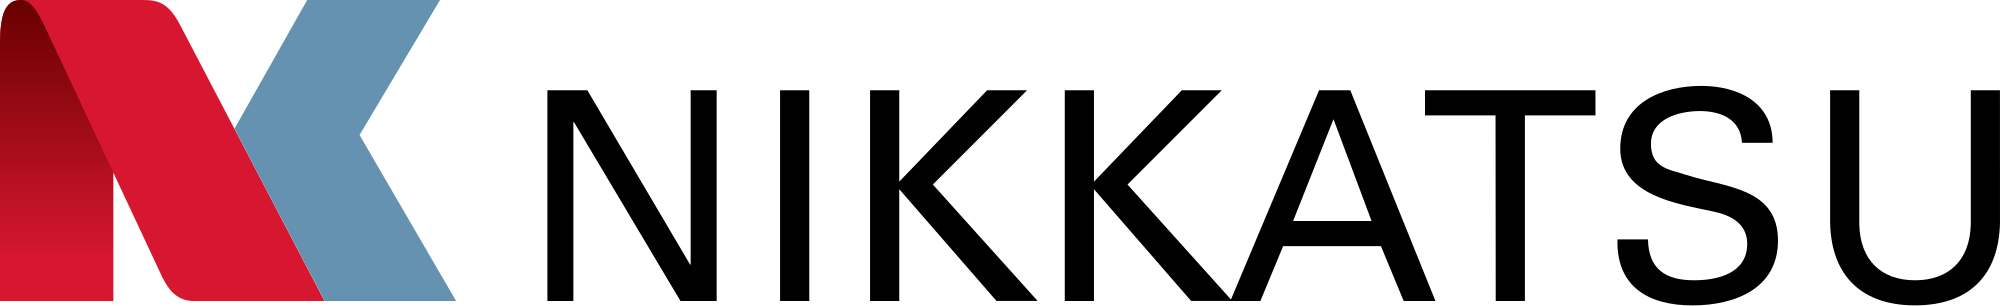 Nikkatsu Corporation Logo